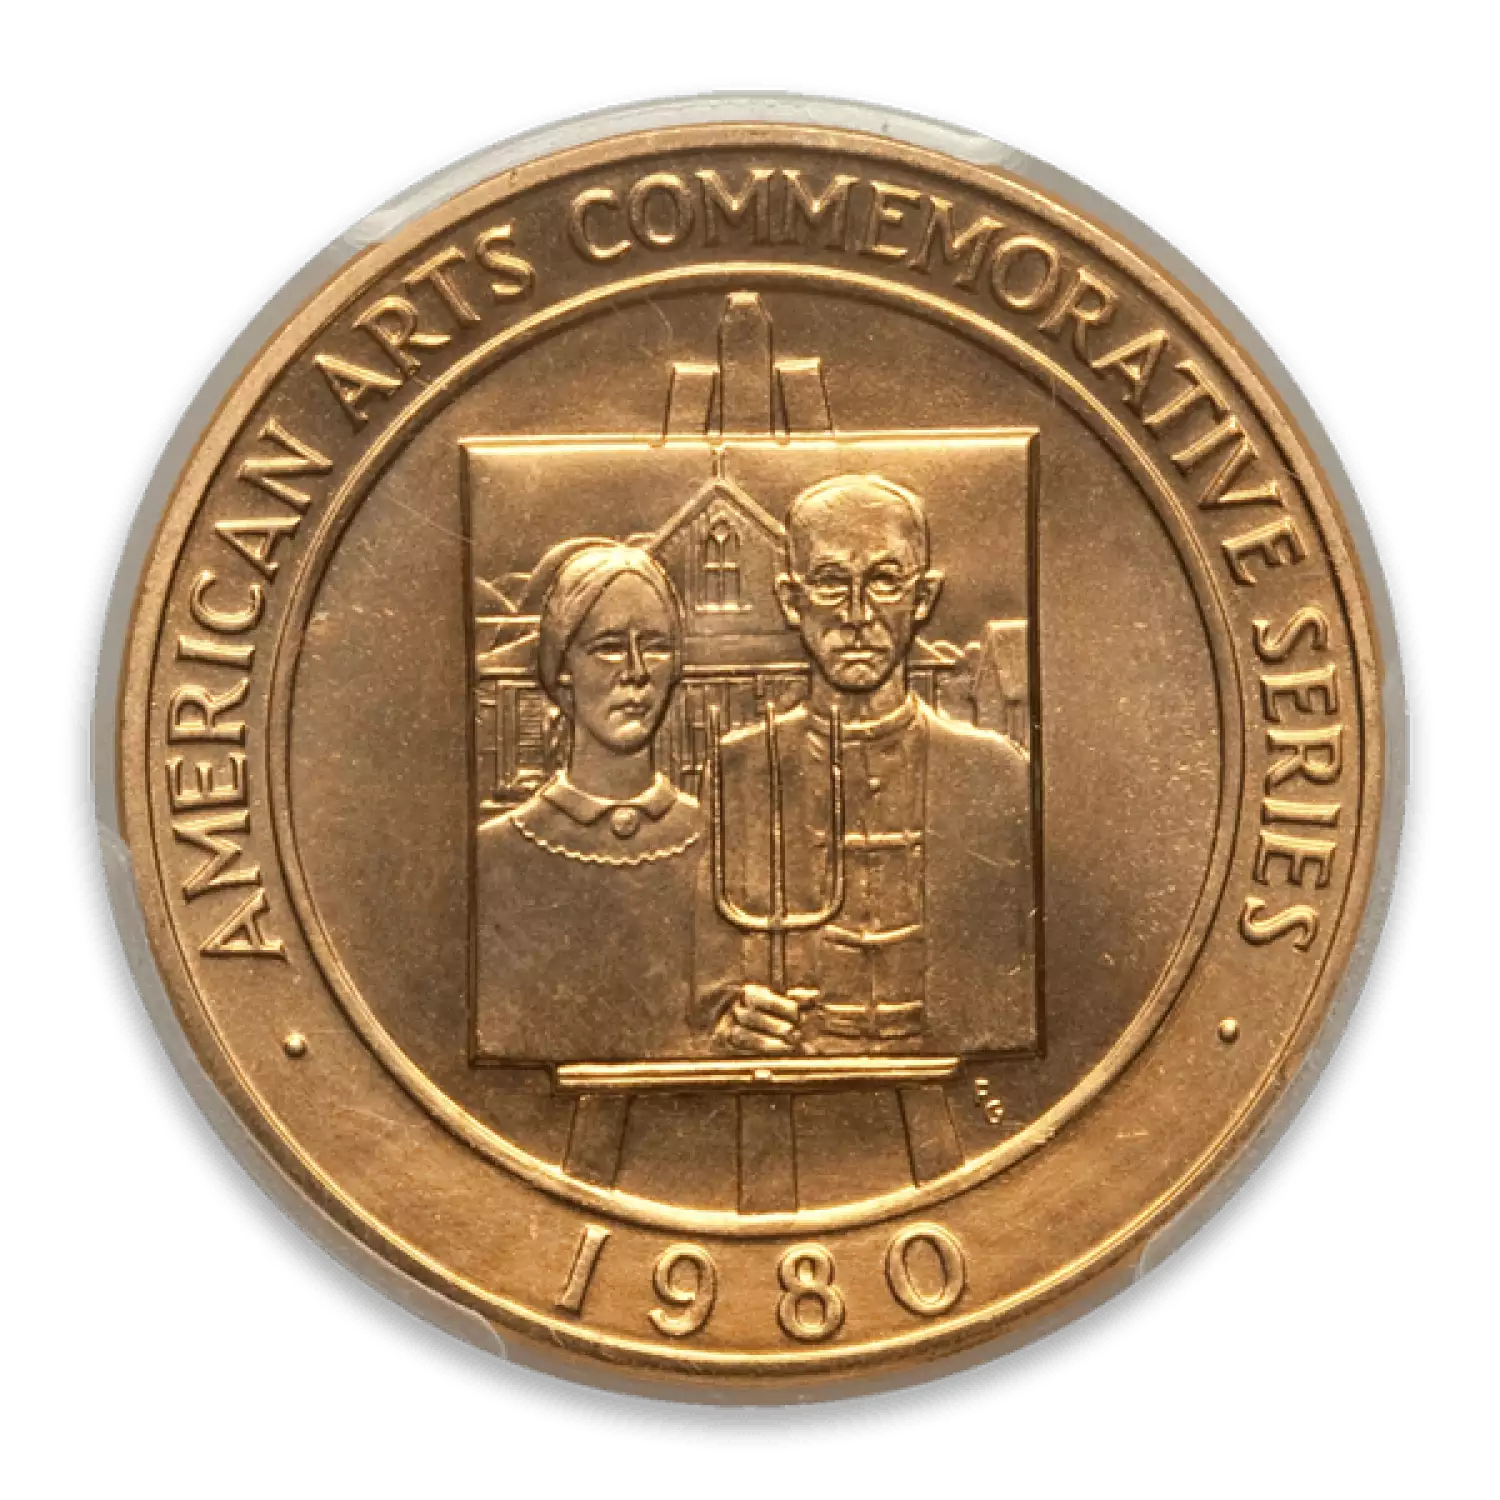 American Gold Art Medallion 1oz - any design